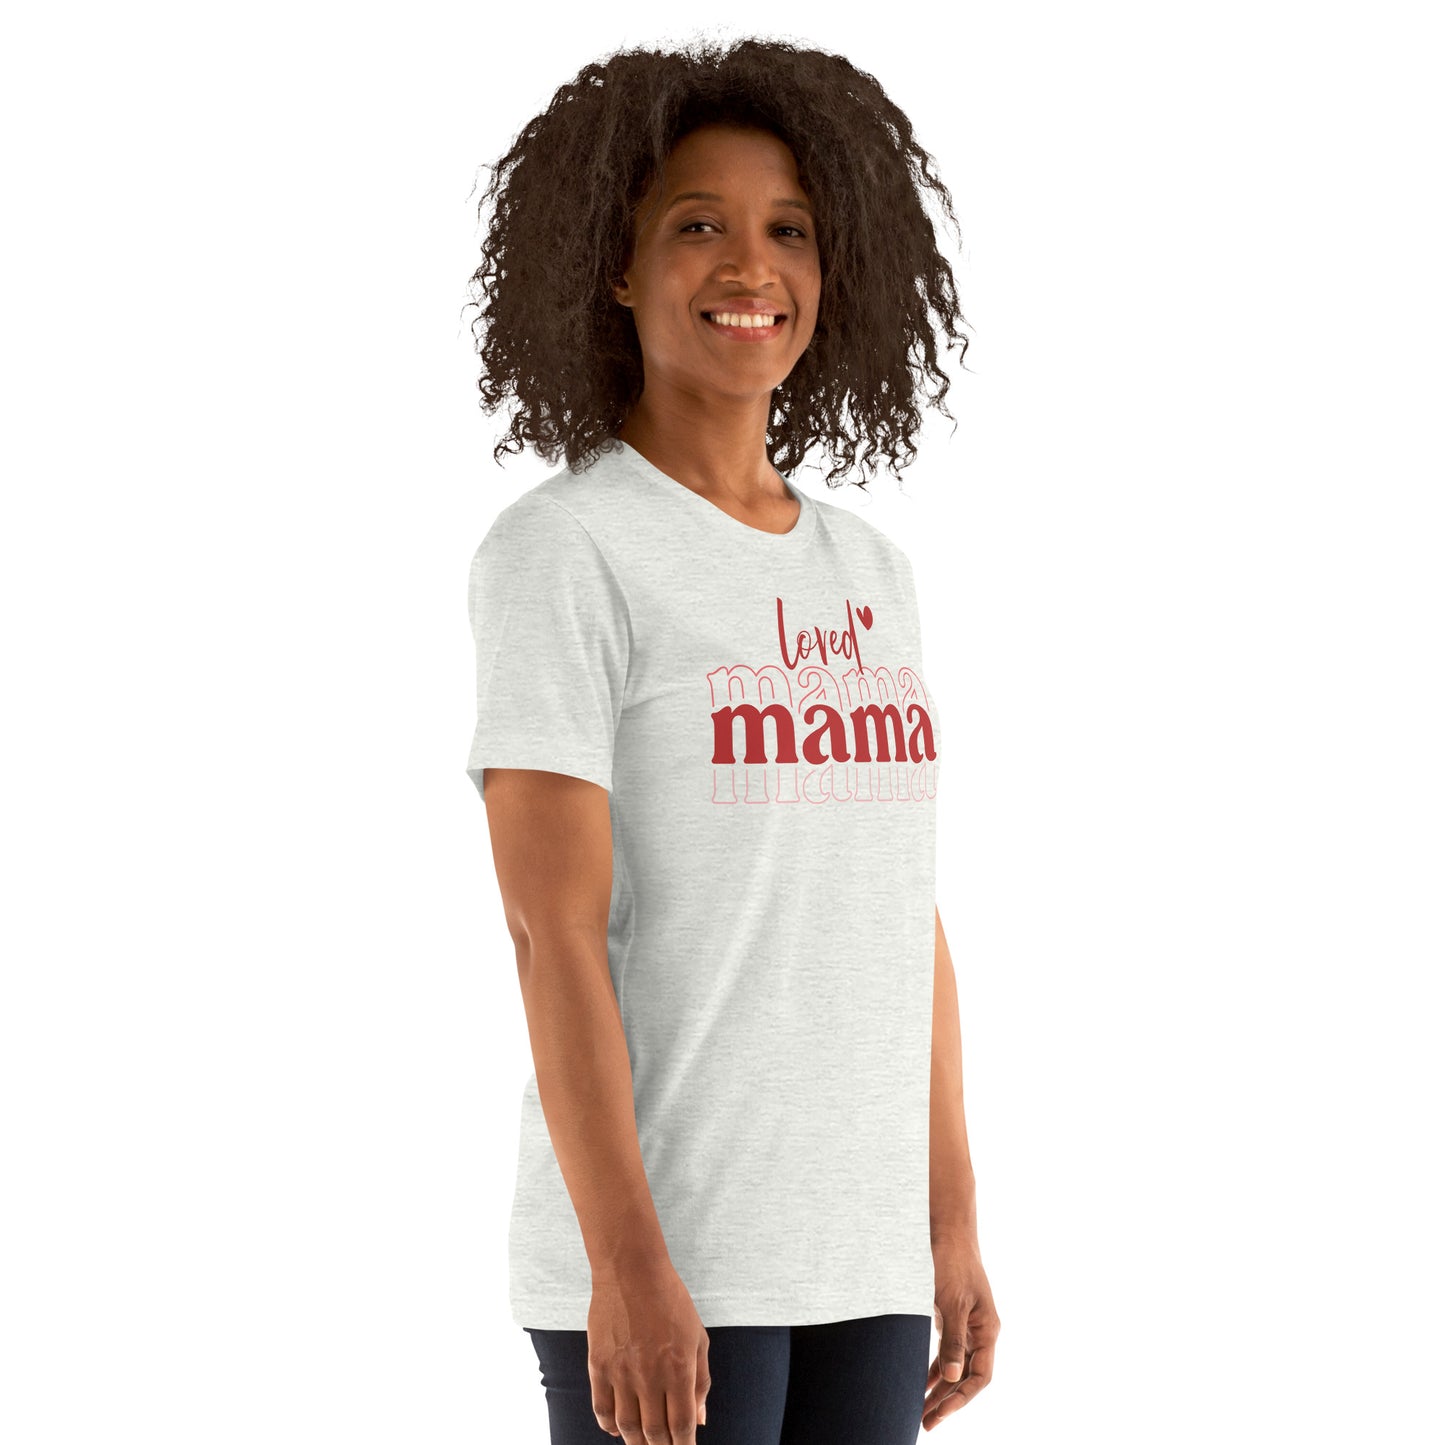 Loved Mama T-shirt